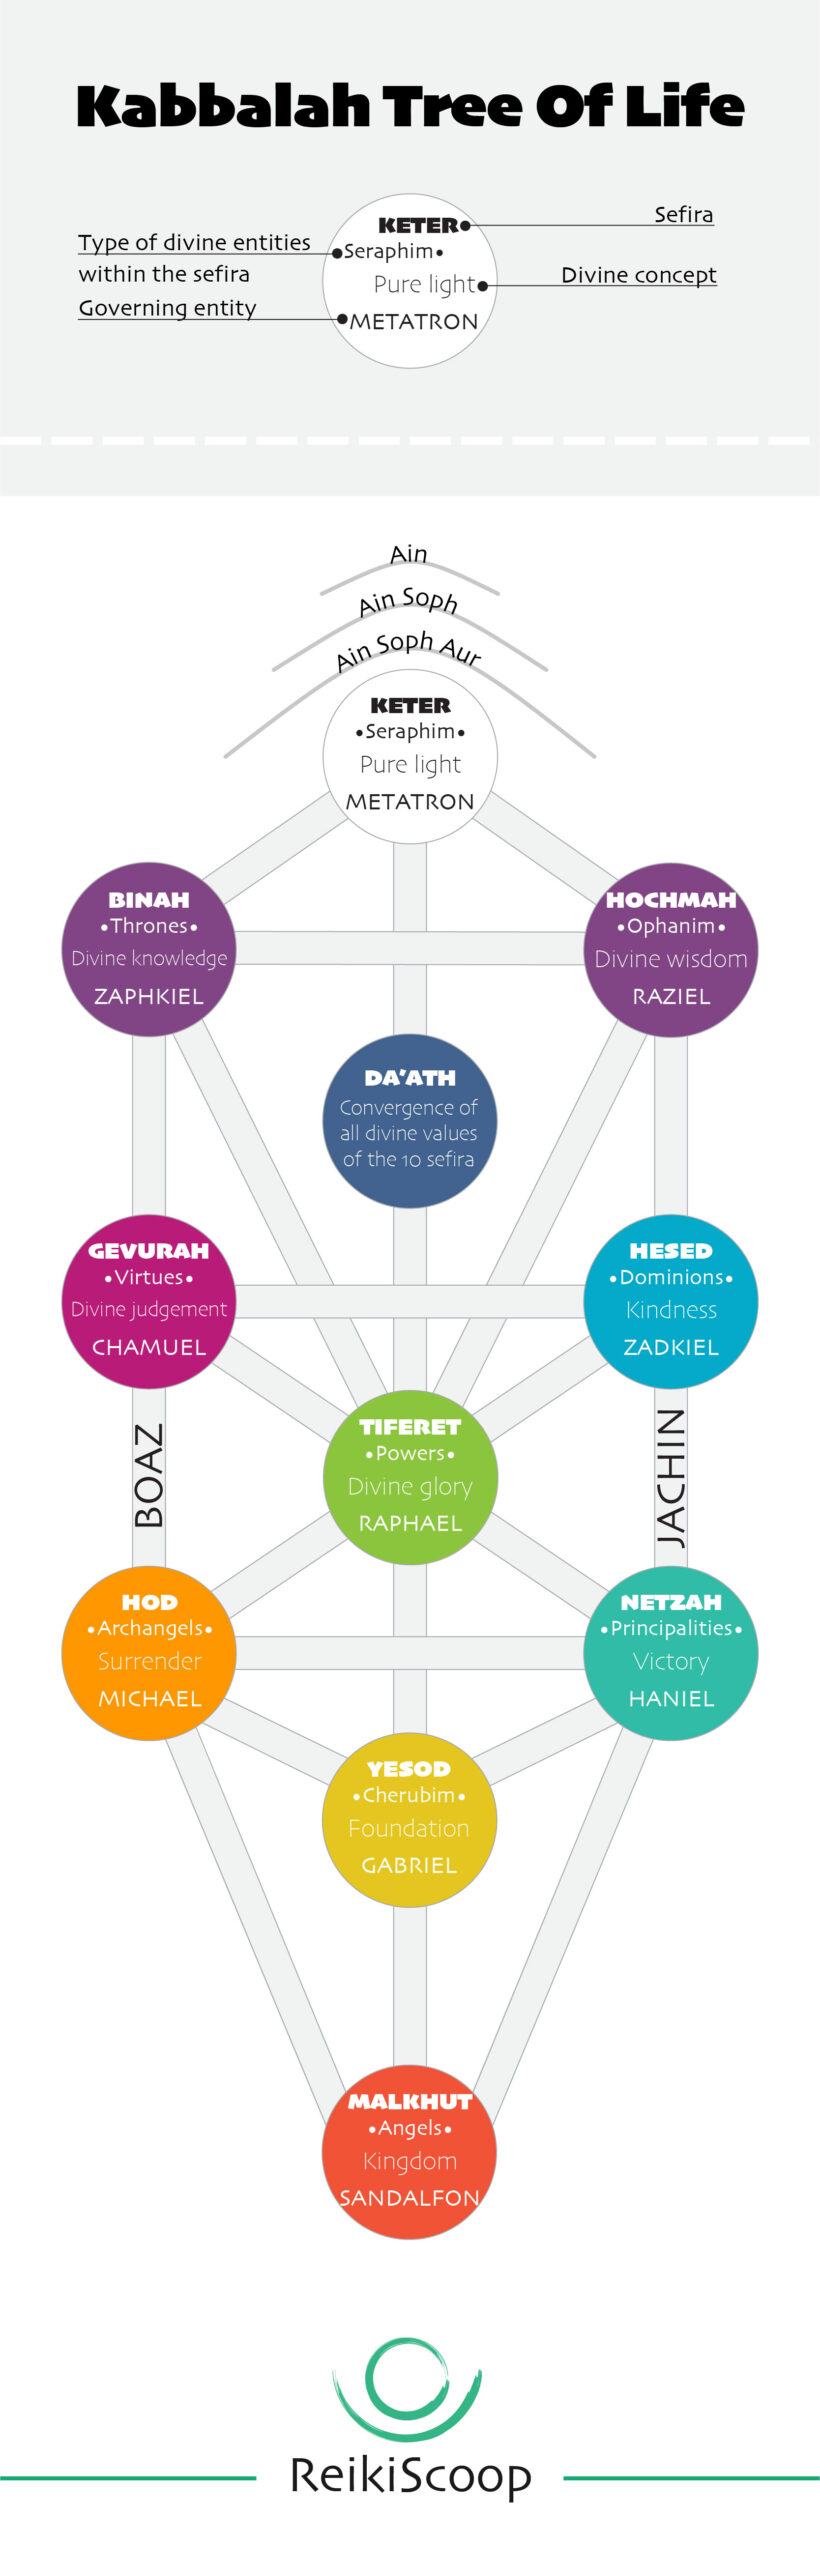 Kabbalah Tree Of Life - Reikiscoop infographic